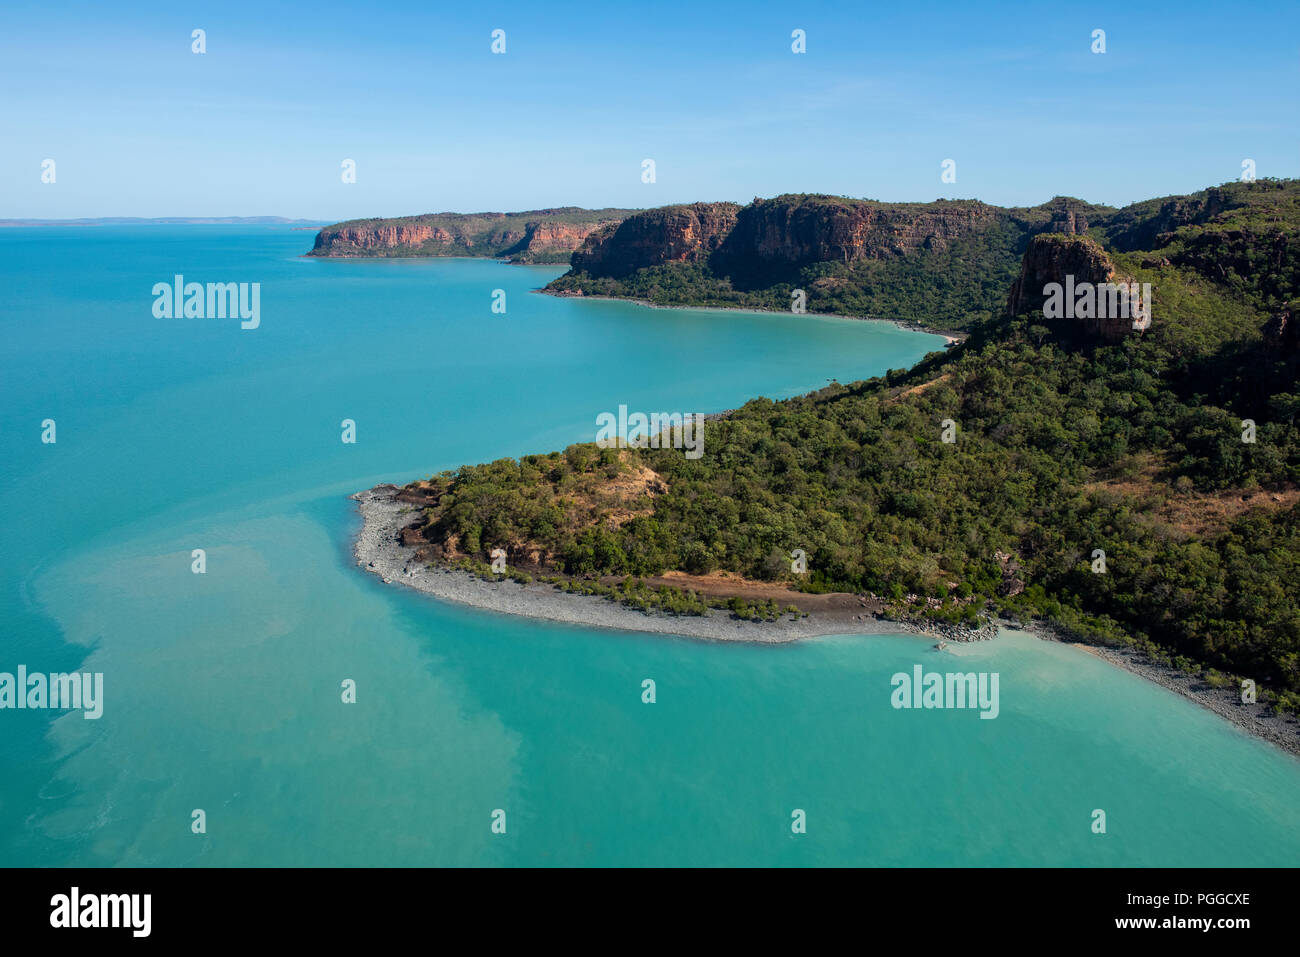 Australia, Western Australia, Kimberley, Hunter River Region. Aerial view of the Mitchell River region coastline where it meets the Timor Sea. Stock Photo